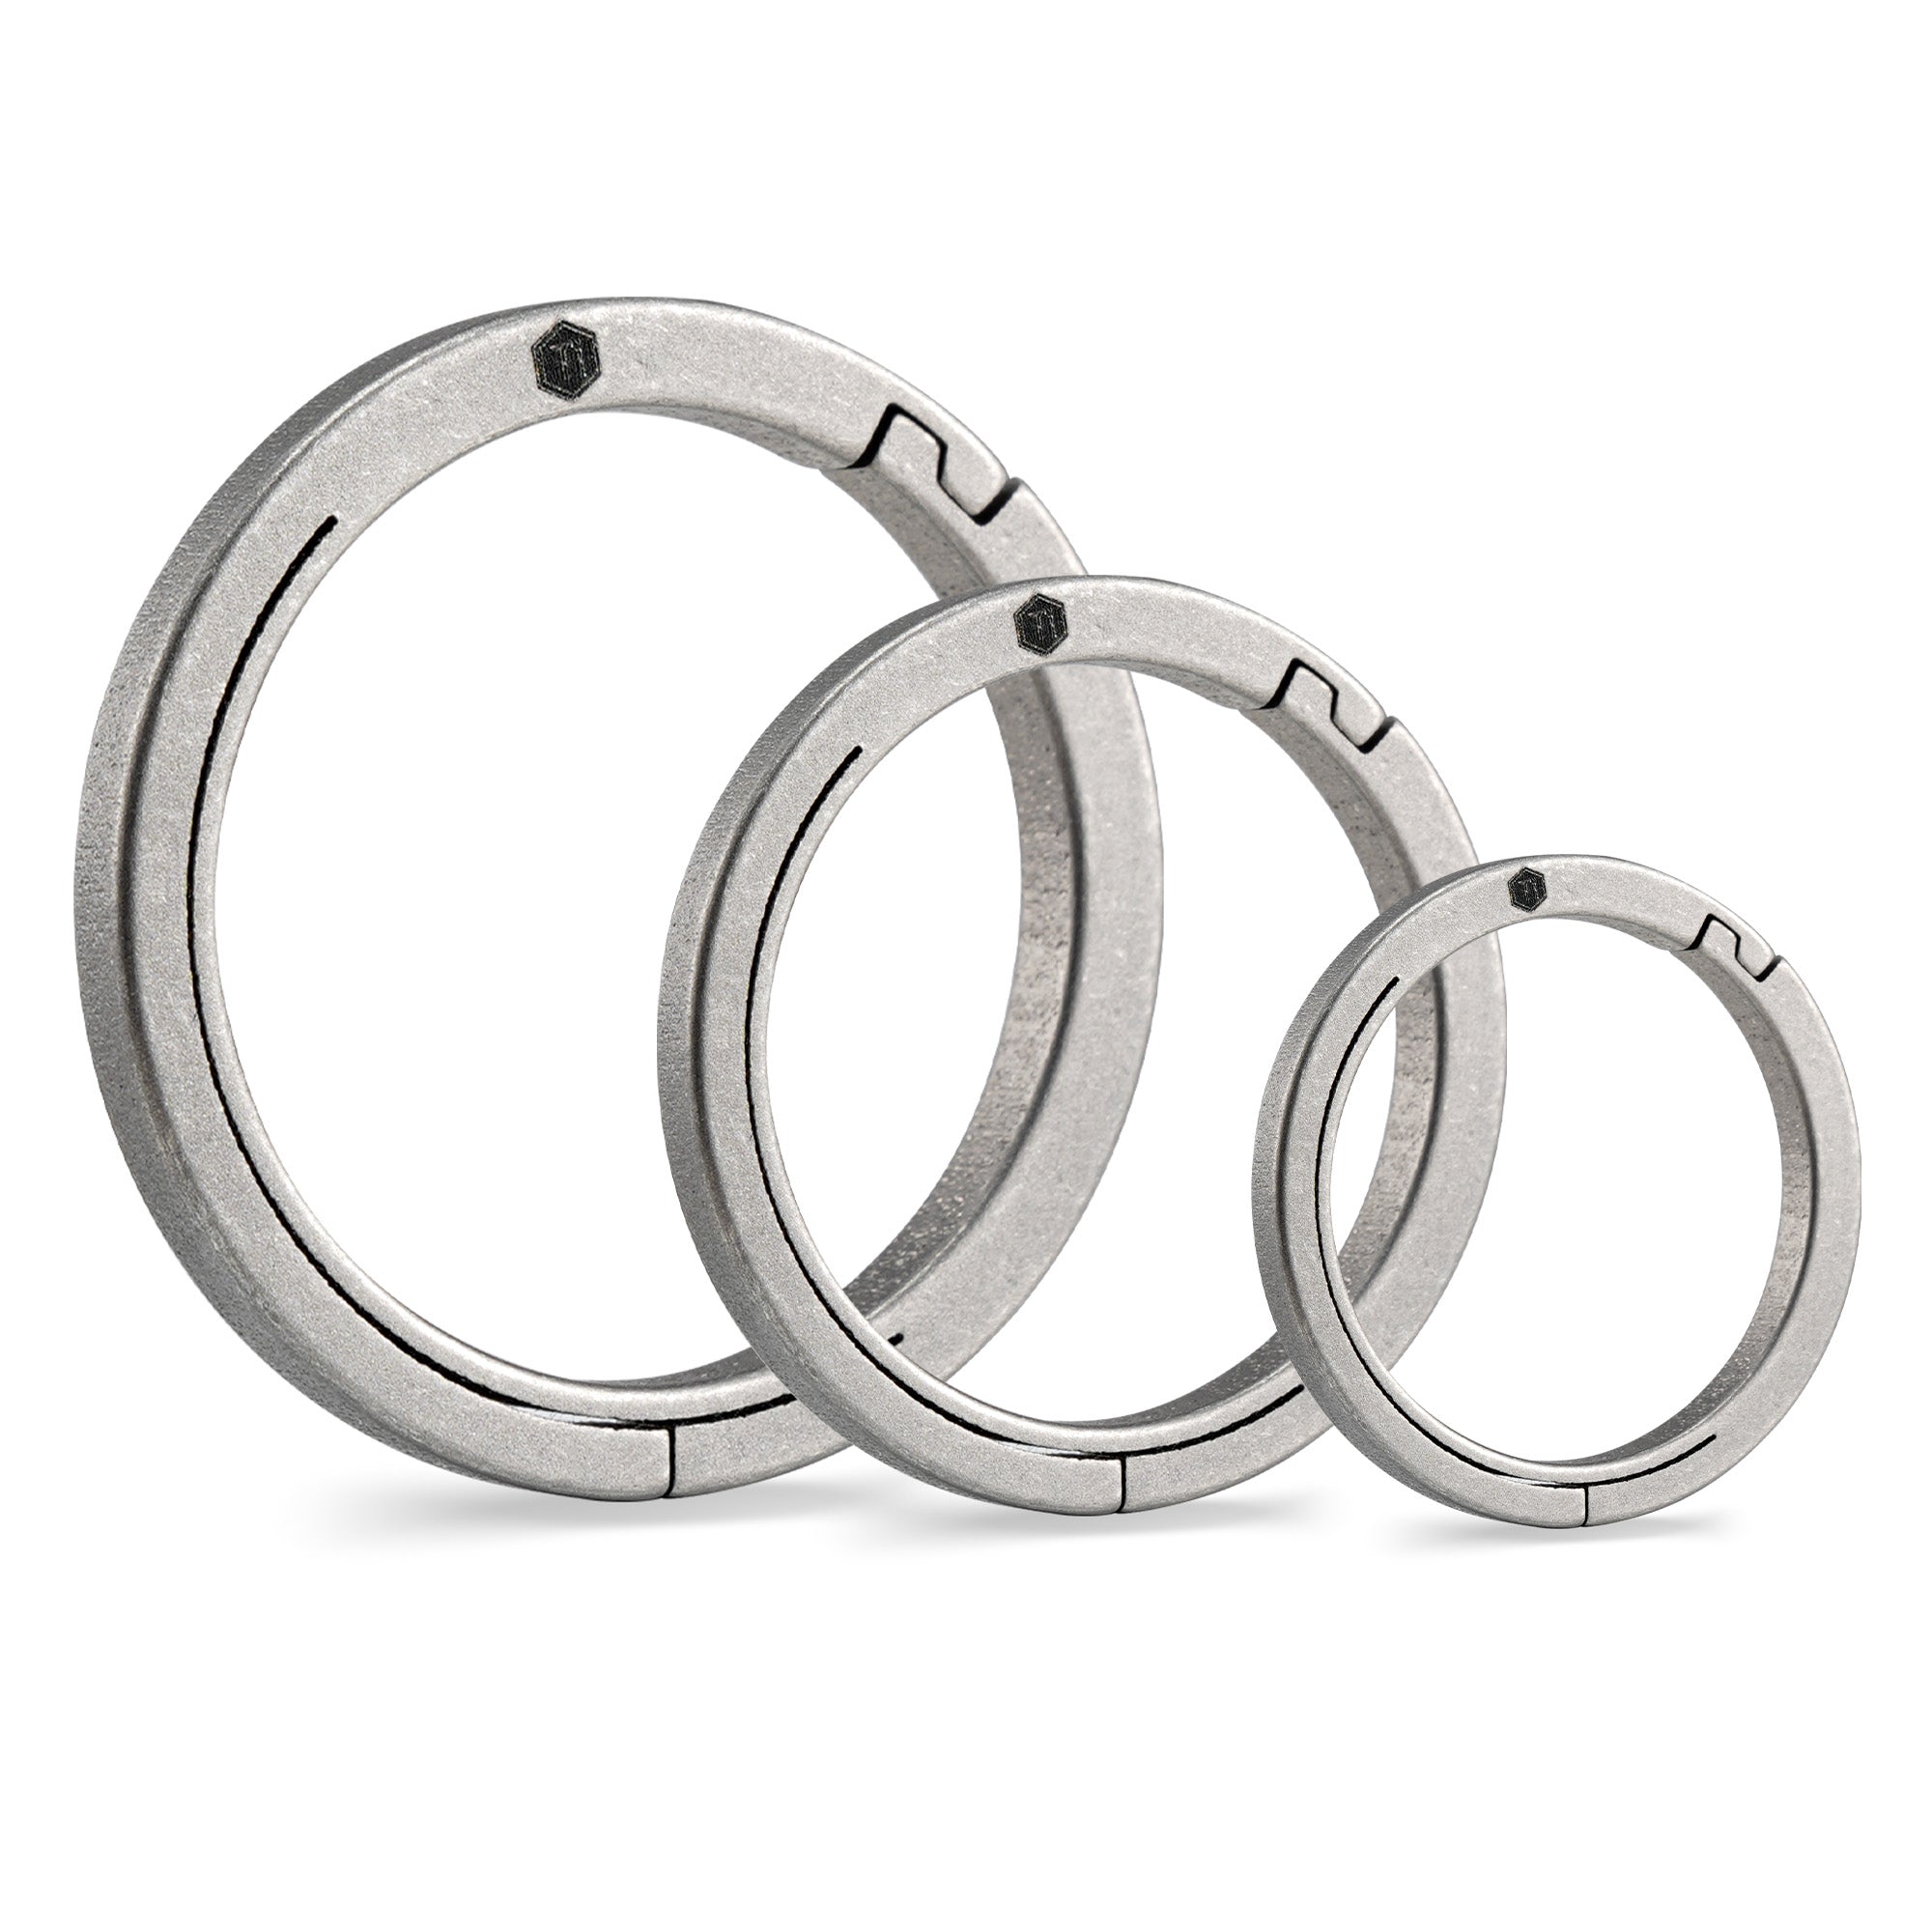 KeyUnity Titanium Side Pushing Key Ring